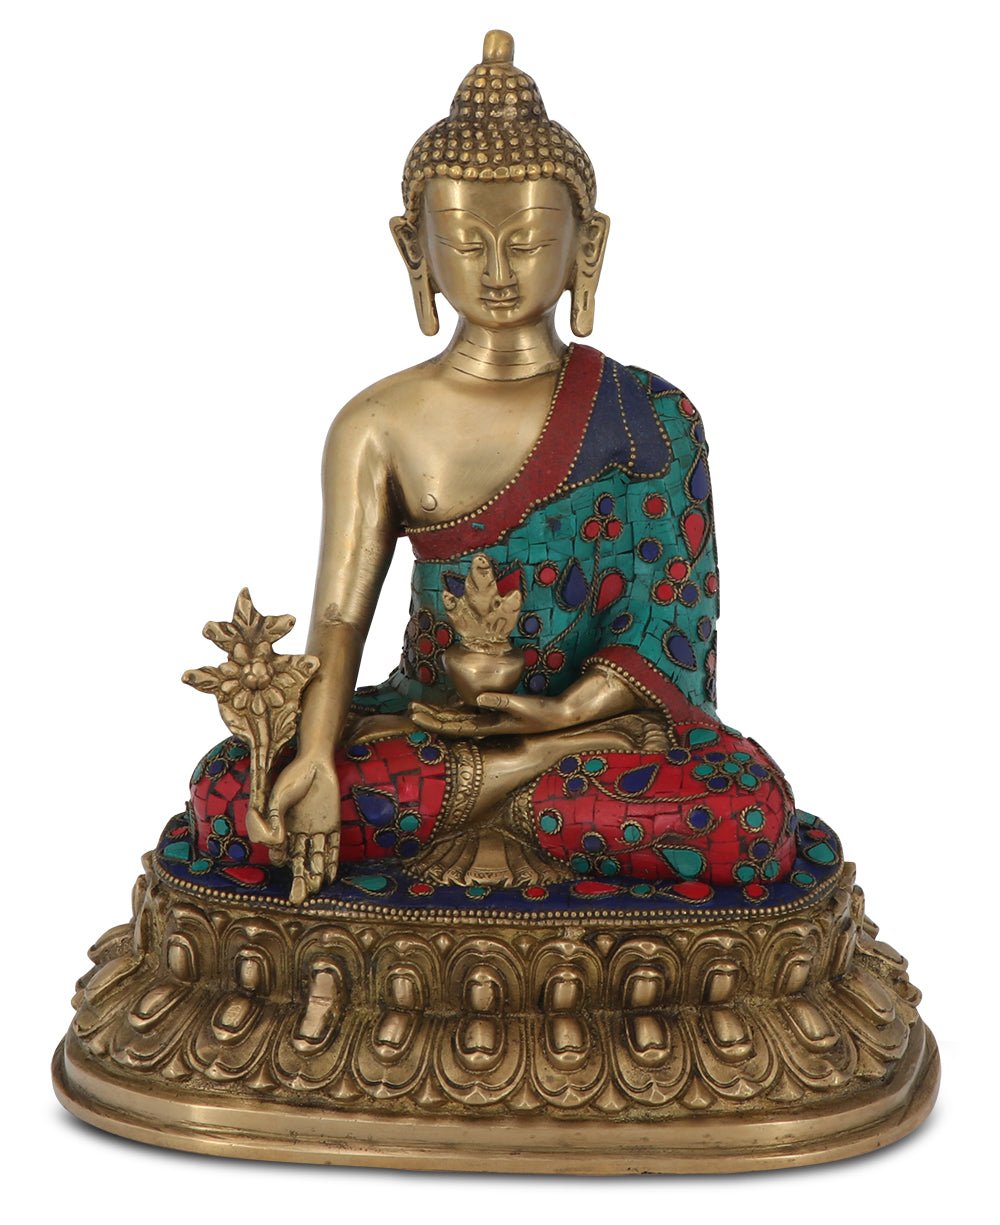 Mosaic Design Brass Medicine Buddha Statue - Sculptures & Statues